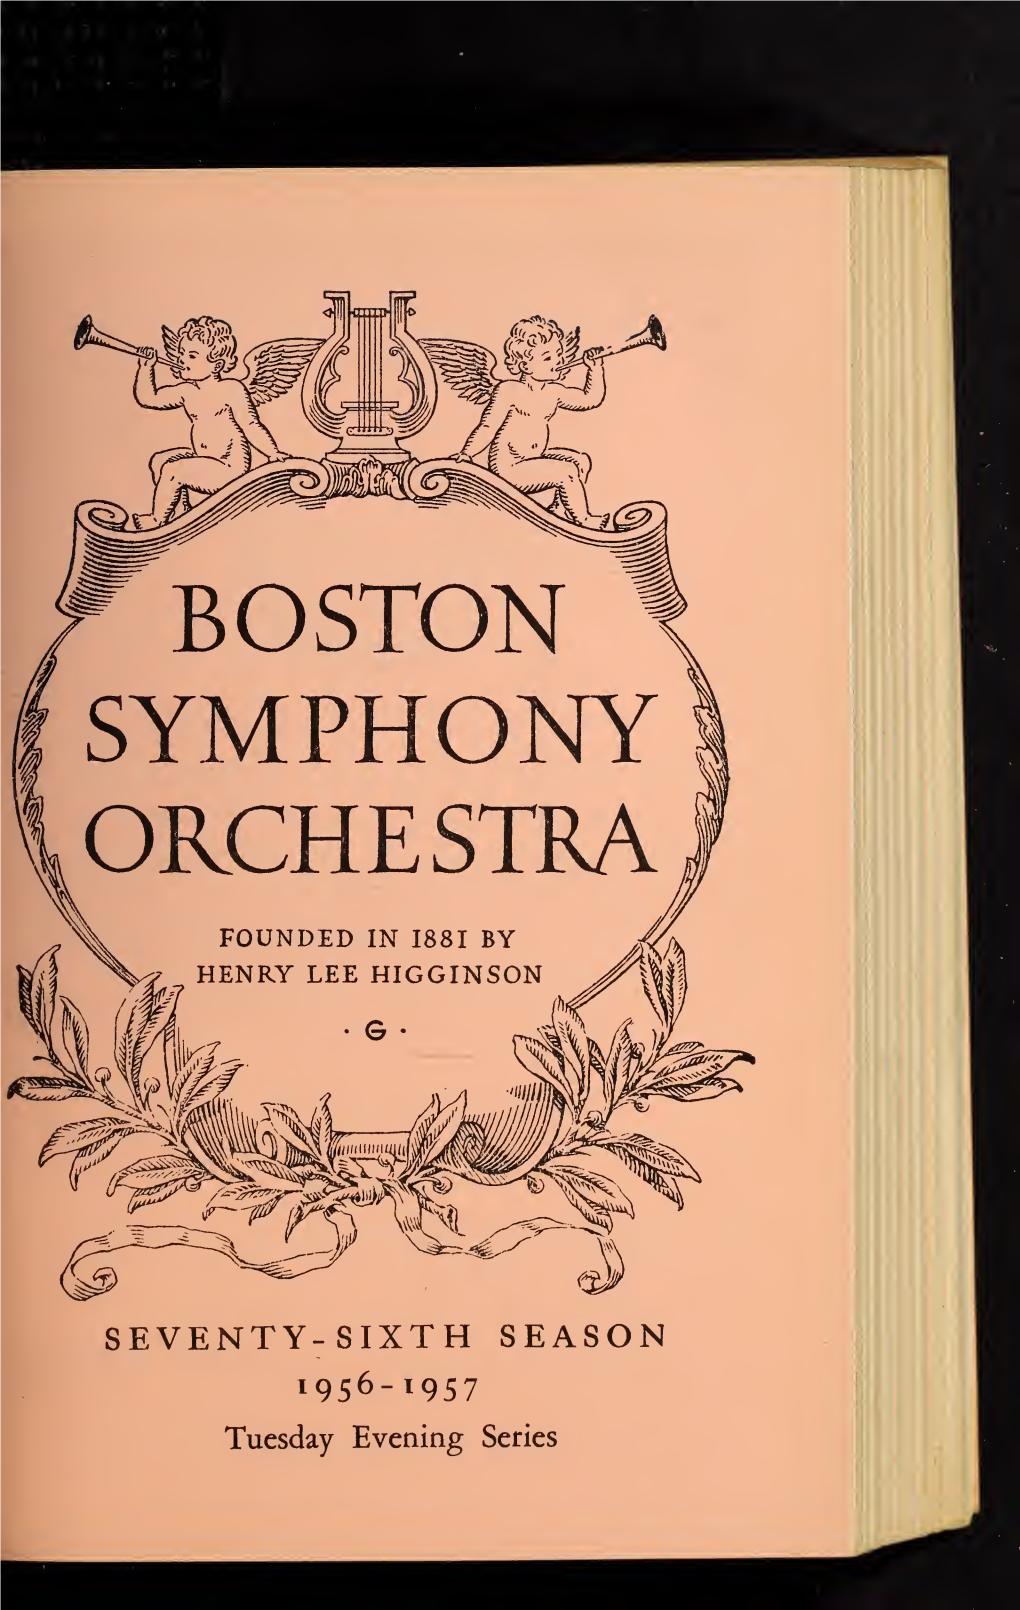 Boston Symphony Orchestra Concert Programs, Season 76, 1956-1957, Subscription